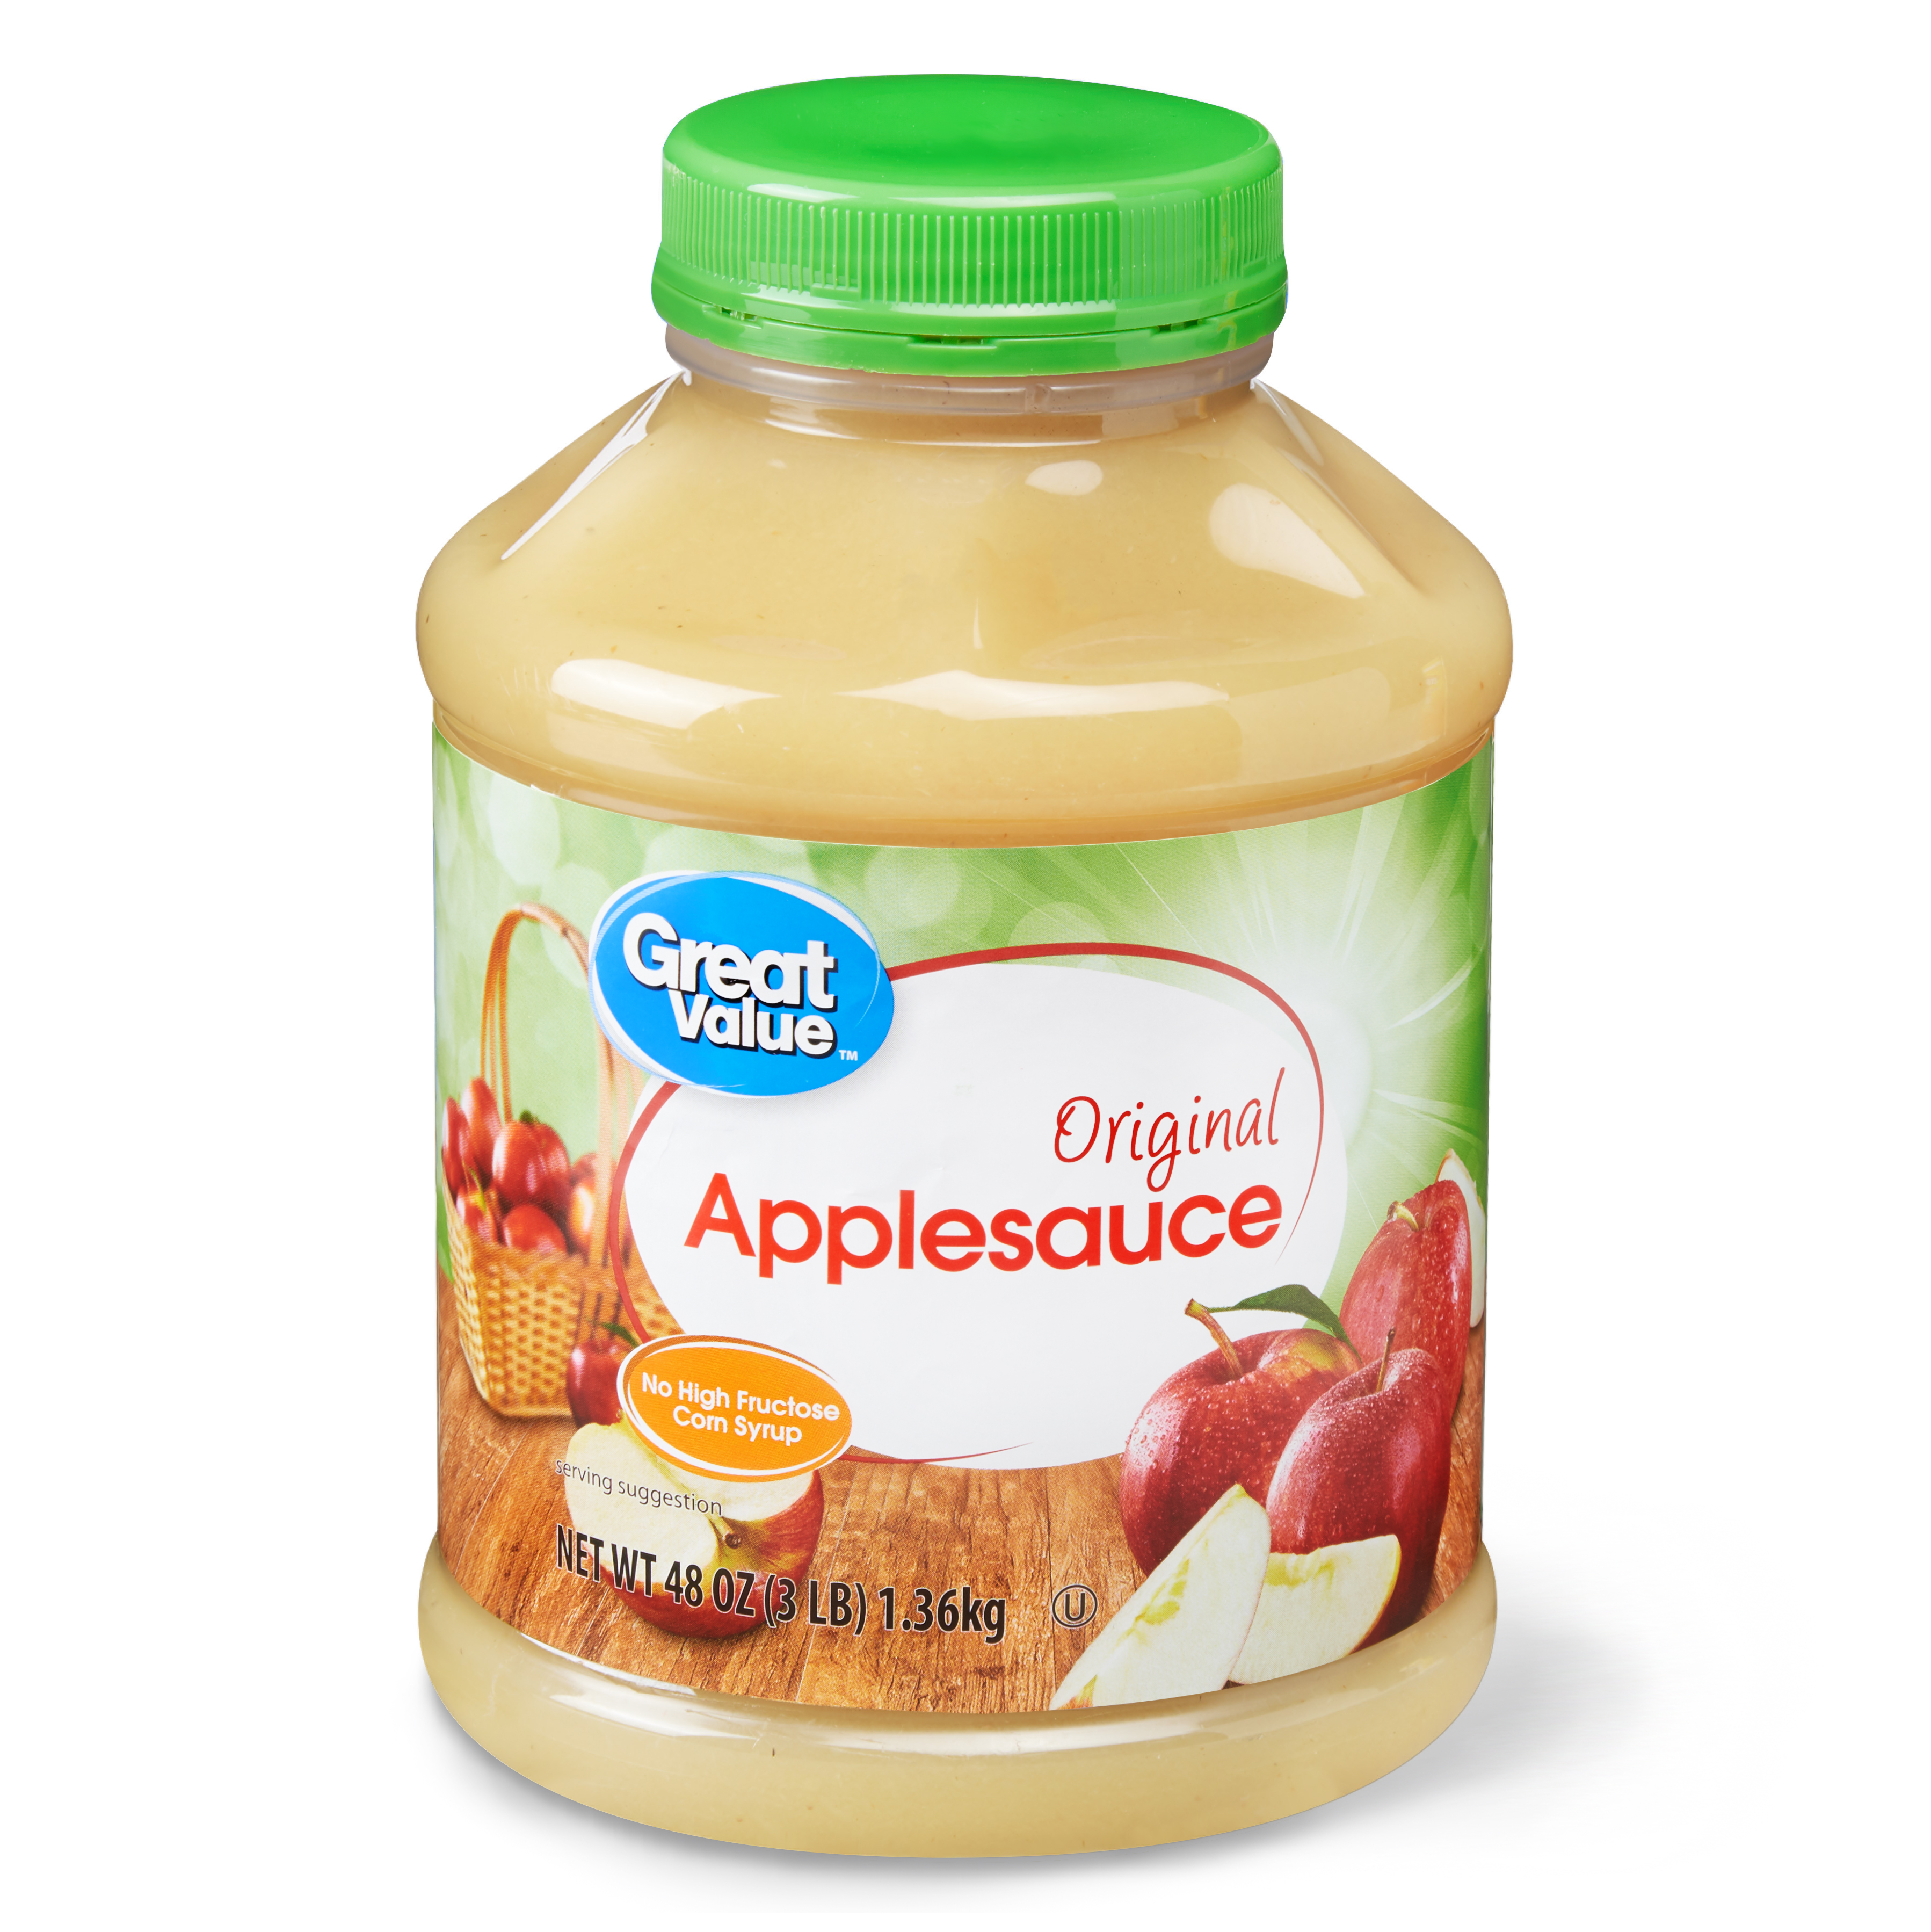 Great Value Original Applesauce, 48 Oz Image